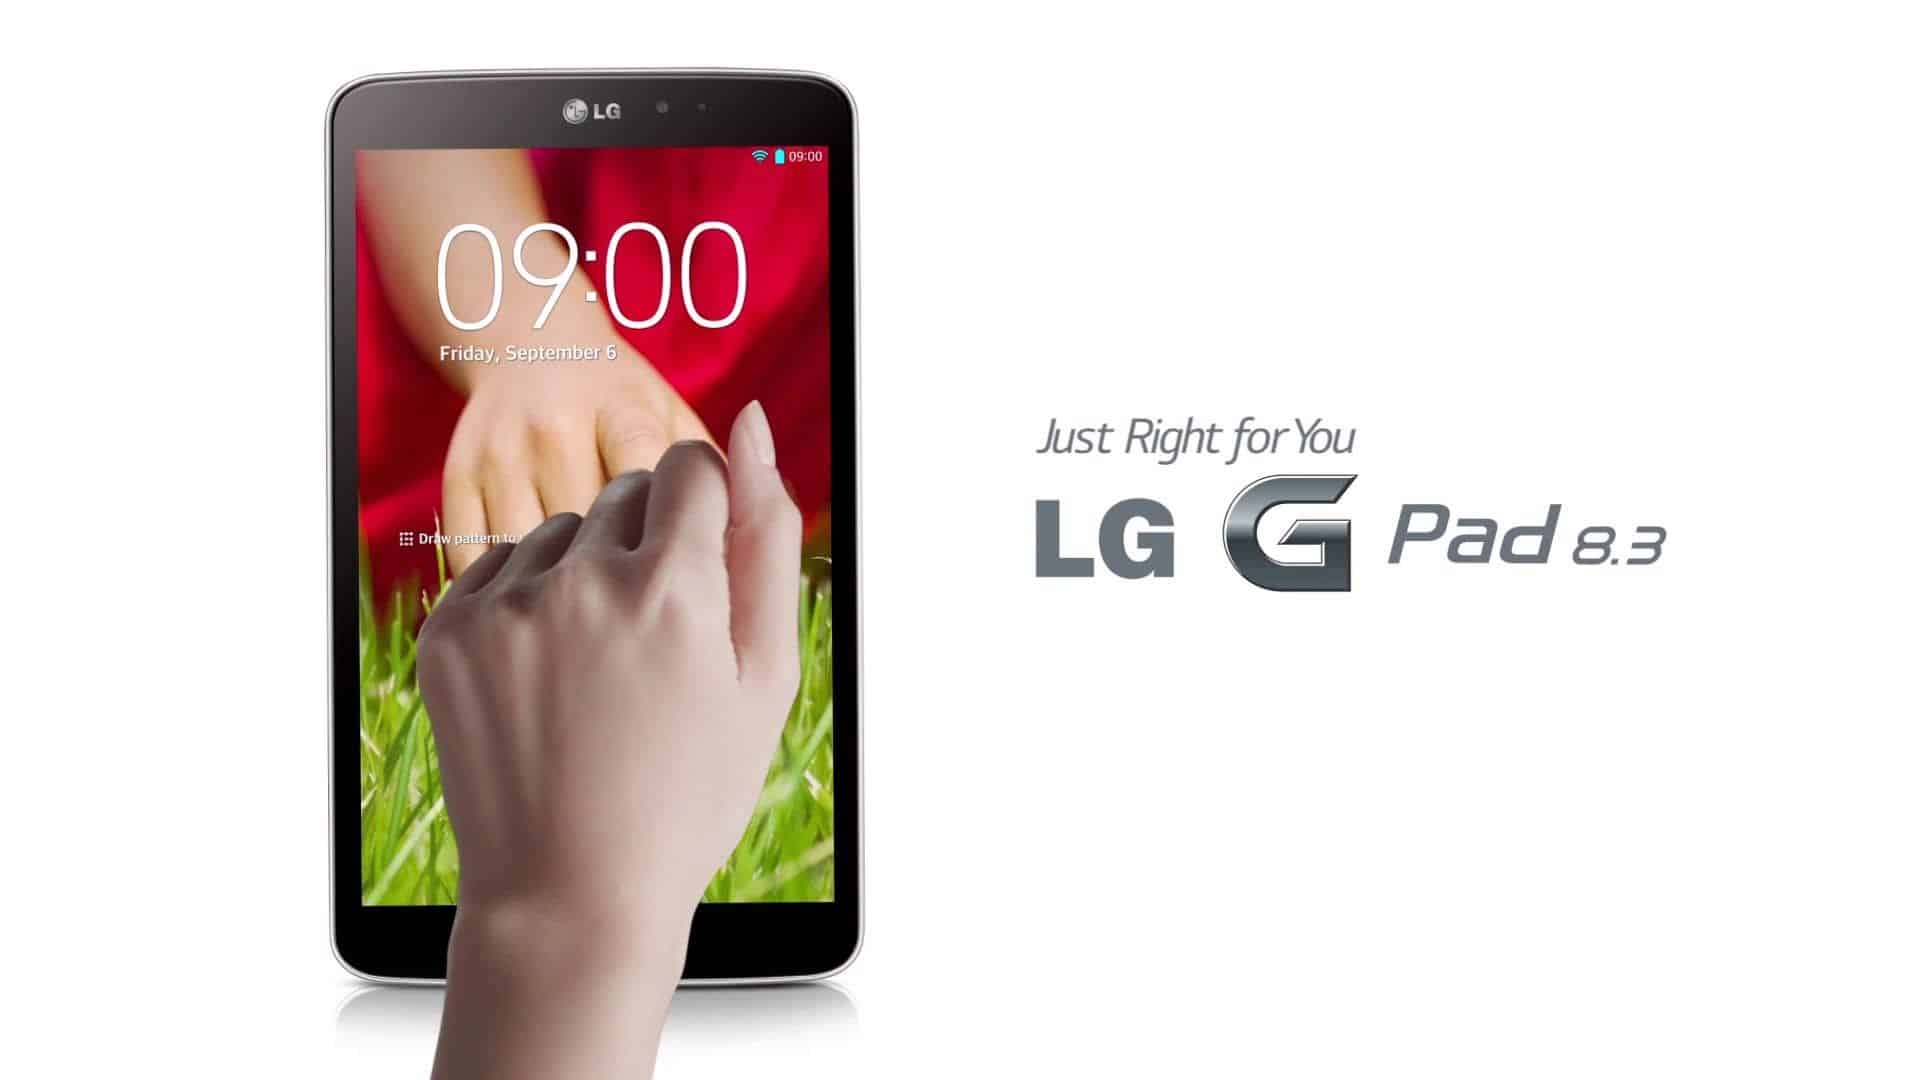 amazon LG G Pad 8.3 reviews LG G Pad 8.3 on amazon newest LG G Pad 8.3 prices of LG G Pad 8.3 LG G Pad 8.3 deals best deals on LG G Pad 8.3 buying a LG G Pad 8.3 lastest LG G Pad 8.3 what is a LG G Pad 8.3 LG G Pad 8.3 at amazon where to buy LG G Pad 8.3 where can i you get a LG G Pad 8.3 online purchase LG G Pad 8.3 LG G Pad 8.3 sale off LG G Pad 8.3 discount cheapest LG G Pad 8.3 LG G Pad 8.3 for sale accessories for lg g pad 8.3 android lollipop lg g pad 8.3 android update lg g pad 8.3 accessories for lg g pad 8.3 lte argos lg g pad 8.3 aggiornamento lg g pad 8.3 android 5.1 lg g pad 8.3 avis lg g pad 8.3 bán lg g pad 8.3 bao da lg g pad 8.3 best case for lg g pad 8.3 best price lg g pad 8.3 buy lg g pad 8.3 uk battery lg g pad 8.3 best rom for lg g pad 8.3 bluetooth keyboard for lg g pad 8.3 black friday lg g pad 8.3 best buy lg g pad 8.3 case for lg g pad 8.3 lte case tablet lg g pad 8.3 convert lg g pad 8.3 to google play edition connect lg g pad 8.3 to tv cấu hình lg g pad 8.3 currys lg g pad 8.3 comprar lg g pad 8.3 case for verizon lg g pad 8.3 lte cover case for lg g pad 8.3 cyanogenmod 12 lg g pad 8.3 danh gia lg g pad 8.3 does lg g pad 8.3 have gps does the lg g pad 8.3 have wireless charging does lg g pad 8.3 have gorilla glass danh gia may tinh bang lg g pad 8.3 digikala lg g pad 8.3 does the lg g pad 8.3 have nfc danh gia lg g pad 8.3 v500 dock lg g pad 8.3 dell venue 8 pro vs lg g pad 8.3 ebay lg g pad 8.3 ellipsis 8 vs lg g pad 8.3 etui lg g pad 8.3 ebay lg g pad 8.3 case ellipsis 7 vs lg g pad 8.3 expansys lg g pad 8.3 en ucuz lg g pad 8.3 e lv lg g pad 8.3 tablet case etui tablet lg g pad 8.3 eladó lg g pad 8.3 free lg g pad 8.3 lte fintie blade x1 lg g pad 8.3 keyboard case fintie lg g pad 8.3 folio case features of lg g pad 8.3 fintie lg g pad 8.3 smart shell case free lg g pad 8.3 lte verizon flash player for lg g pad 8.3 folie lg g pad 8.3 forum xda lg g pad 8.3 funda tablet lg g pad 8.3 giá lg g pad 8.3 get lg g pad 8.3 free galaxy tab s 8.4 vs lg g pad 8.3 galaxy tab 4 vs lg g pad 8.3 google nexus 7 vs lg g pad 8.3 galaxy tab 3 8.0 vs lg g pad 8.3 galaxy note 8 vs lg g pad 8.3 lg g pad 8.3 gsmarena gps lg g pad 8.3 google play lg g pad 8.3 harga lg g pad 8.3 harga lg g pad 8.3 lte hudl 2 vs lg g pad 8.3 husa lg g pad 8.3 how much is lg g pad 8.3 in the philippines how to screenshot on lg g pad 8.3 how to unroot lg g pad 8.3 housse lg g pad 8.3 how to connect lg g pad 8.3 to tv how to root lg g pad 8.3 ipad mini vs lg g pad 8.3 ivso keybook bluetooth keyboard case for lg g pad 8.3 tablet ipad air vs lg g pad 8.3 imei lg g pad 8.3 install cyanogenmod lg g pad 8.3 ipad mini 2 vs lg g pad 8.3 idealo lg g pad 8.3 ipad mini retina vs lg g pad 8.3 install twrp lg g pad 8.3 jual lg g pad 8.3 john lewis lg g pad 8.3 jual tablet lg g pad 8.3 jual lg g pad 8.3 indonesia voia soft jelly case for lg g pad 8.3 mise a jour android lg g pad 8.3 mise a jour lg g pad 8.3 mise à jour lollipop lg g pad 8.3 lg g pad 8.3 jb hi fi voia lg g pad 8.3 premium soft jelly case keyboard case for lg g pad 8.3 keyboard for lg g pad 8.3 lte kelebihan dan kekurangan lg g pad 8.3 kindle fire hdx 8.9 vs lg g pad 8.3 kindle fire hdx vs lg g pad 8.3 kitkat update for lg g pad 8.3 kelebihan lg g pad 8.3 kindle fire hdx 7 vs lg g pad 8.3 kapan lg g pad 8.3 masuk indonesia keyboard case for lg g pad 8.3 lte lg optimus l7 ii+ lg g pad 8.3 tablet lg g pad 7.0 vs lg g pad 8.3 lg g pad 8.3 vs lg g pad 8.3 google play edition lg g pad 8.0 vs lg g pad 8.3 lollipop lg g pad 8.3 v500 lazada lg g pad 8.3 lenovo yoga 8 vs lg g pad 8.3 lg quickpad case for lg g pad 8.3 lenovo s8 vs lg g pad 8.3 lollipop rom for lg g pad 8.3 máy tính bảng lg g pad 8.3 manual lg g pad 8.3 moko lg g pad 8.3 case my lg g pad 8.3 lte wont turn on mua lg g pad 8.3 manual for lg g pad 8.3 lte miui lg g pad 8.3 marshmallow lg g pad 8.3 memory card for lg g pad 8.3 mua lg g pad 8.3 o dau nexus 7 vs lg g pad 8.3 nexus 9 vs lg g pad 8.3 new lg g pad 8.3 nvidia shield vs lg g pad 8.3 nexus 7 vs lg g pad 8.3 lte notebookcheck lg g pad 8.3 nhattao lg g pad 8.3 nexus 7 or lg g pad 8.3 nexus 10 vs lg g pad 8.3 new oem verizon lg g-pad 8.3 rugged case otterbox lg g pad 8.3 olx lg g pad 8.3 op lung lg g pad 8.3 overclock lg g pad 8.3 official lg g pad 8.3 case obal lg g pad 8.3 official lollipop for lg g pad 8.3 offre de remboursement lg g pad 8.3 opinioni lg g pad 8.3 opiniones lg g pad 8.3 price of lg g pad 8.3 in india price of lg g pad 8.3 tablet price of lg g pad 8.3 in the philippines price of lg g pad 8.3 in pakistan pc world lg g pad 8.3 price of lg g pad 8.3 lte pret tableta lg g pad 8.3 pouzdro na tablet lg g pad 8.3 problems with lg g pad 8.3 prix lg g pad 8.3 quickpad lg g pad 8.3 quickpad case lg g pad 8.3 quick cover lg g pad 8.3 lg g pad 8.3 qi charging lg g pad 8.3 qpair lg g pad 8.3 quickpad official case lg g pad 8.3 sound quality lg g pad 8.3 quick remote lg g pad 8.3 tablet quad-core lg g pad 8.3 qslide rugged case for lg g pad 8.3 refurbished lg g pad 8.3 review lg g pad 8.3 tablet root lg g pad 8.3 rom lollipop lg g pad 8.3 rom lg g pad 8.3 root lg g pad 8.3 4.4.2 rootear lg g pad 8.3 reset lg g pad 8.3 root lg g pad 8.3 lollipop samsung galaxy tab pro 8.4 vs lg g pad 8.3 spesifikasi lg g pad 8.3 screenshot lg g pad 8.3 spesifikasi lg g pad 8.3 lte samsung galaxy tab 4 vs lg g pad 8.3 samsung tab s 8.4 vs lg g pad 8.3 screen protector for lg g pad 8.3 slimport lg g pad 8.3 software update for lg g pad 8.3 sd card for lg g pad 8.3 tablet lg g pad 8.3 lte tablet lg g pad 8.3 review tablet lg g pad 8.3 tablet lg g pad 8.3 v500 tablette lg g pad 8.3 tablet lg g pad 8.3 harga tesco lg g pad 8.3 tableta lg g pad 8.3 tablet lg g pad 8.3 cena tablette lg g pad 8.3 prix unroot lg g pad 8.3 unlock bootloader lg g pad 8.3 used lg g pad 8.3 update center lg g pad 8.3 user manual for lg g pad 8.3 unboxing lg g pad 8.3 user guide for lg g pad 8.3 unbrick lg g pad 8.3 update lg g pad 8.3 v500 ubuntu touch lg g pad 8.3 verizon lg g pad 8.3 lte verizon lg g pad 8.3 lte review verizon rugged case for lg g pad 8.3 lte verizon lg g pad 8.3 specs verizon free lg g pad 8.3 lte verizon folio for lg g pad 8.3 lte verizon rugged case for lg g pad 8.3 lte - black/gray verizon lg g pad 8.3 lollipop voia lg g pad 8.3 verizon lg g pad 8.3 screen protector will lg g pad 8.3 get lollipop will lg g pad 8.3 get android l wts lg g pad 8.3 where to buy lg g pad 8.3 google play edition where can i buy lg g pad 8.3 wireless lg g pad 8.3 lte whatsapp lg g pad 8.3 where to buy lg g pad 8.3 tablet where to buy lg g pad 8.3 in singapore wiki lg g pad 8.3 xda lg g pad 8.3 xda lg g pad 8.3 lollipop xiaomi mi pad vs lg g pad 8.3 xperia z2 tablet vs lg g pad 8.3 xda developers lg g pad 8.3 xda root lg g pad 8.3 xataka lg g pad 8.3 lg g pad x8.3 vs lg g pad 8.3 fintie blade x1 lg g pad 8.3 youtube tablet lg g pad 8.3 youtube lg g pad 8.3 lenovo yoga tablet 8 vs lg g pad 8.3 lenovo yoga 2 vs lg g pad 8.3 lg g pad 8.3 lte youtube lg g pad 8.3 review yugatech lg g pad 8.3 google play edition youtube lg g pad 8.3 v500 youtube lg g pad 8.3 yandex market zaggkeys folio for lg g pad 8.3 lte zaggkeys folio lg g pad 8.3 zagg lg g pad 8.3 zagg folio case lg g pad 8.3 zagg keyboard bundle for lg g pad 8.3 lte zaggkeys lg g pad 8.3 zagg folio lg g pad 8.3 zwame lg g pad 8.3 zoom lg g pad 8.3 sony xperia tablet z vs lg g pad 8.3 đánh giá lg g pad 8.3 đánh giá máy tính bảng lg g pad 8.3 đánh giá lg g pad 8.3 tinhte đánh giá lg g pad 8.3 v500 đánh giá chi tiết lg g pad 8.3 16gb lg g pad 8.3 full hd android 4.2 tablet samsung galaxy tab 4 10.1 vs lg g pad 8.3 galaxy tab 4 10.1 vs lg g pad 8.3 cyanogenmod 13 lg g pad 8.3 asus memo pad fhd 10 vs lg g pad 8.3 cyanogenmod 12.1 lg g pad 8.3 asus nexus 7 2013 vs lg g pad 8.3 ipad 2 vs lg g pad 8.3 nexus 7 2013 vs lg g pad 8.3 asus google nexus 7 2013 vs lg g pad 8.3 lg g pad 8.3 2015 lg g pad 8.3 review 2015 lg g pad 8.3 price philippines 2015 samsung tab 3 8.0 vs lg g pad 8.3 samsung galaxy tab 3 vs lg g pad 8.3 galaxy tab 3 8 vs lg g pad 8.3 ipad mini 3 vs lg g pad 8.3 samsung galaxy tab 3 7.0 vs lg g pad 8.3 lg g pad 8.3 32gb lg g pad 8.3 3g price lg g pad 8.3 3g lg g pad 8.3 quickpad case ccf-310 4pda lg g pad 8.3 4pda.ru lg g pad 8.3 4pda lg g pad 8.3 v500 ipad mini 4 vs lg g pad 8.3 samsung tab 4 7.0 vs lg g pad 8.3 samsung galaxy tab 4 7.0 vs lg g pad 8.3 samsung galaxy tab 4 7 vs lg g pad 8.3 aosp rom of 5.1 on my lg g pad 8.3 lollipop 5.0.2 lg g pad 8.3 lenovo s8-50 vs lg g pad 8.3 دانلود رام رسمی اندروید 5 برای lg g pad 8.3 android 5 на lg g pad 8.3 android 5.0 lollipop lg g pad 8.3 lollipop 5.1 lg g pad 8.3 android 5 update for lg g pad 8.3 gappas android 5.1 lg g pad 8.3 android 6.0 lg g pad 8.3 lg g pad 8.3 64gb lg g pad 8.3 6.0 lg g pad v500 (8.3 inch) tablet snapdragon 600 lg g pad 8.3. snap 600 lg g pad 8.3. snap 600 2gb ramu full hd lg g pad 8.3 v500 android 6.0 6. lg g pad 8.3 android 6 lg g pad 8.3 lg g pad 8.3 v500 android 6 lg g pad 8.3 v500 lg g pad 8.3 cũ lg g pad 8.3 xda lg g pad 8.3 gia bao nhieu lg g pad 8.3 accessories lg g pad 8.3 asda lg g pad 8.3 lte accessories lg g pad 8.3 android update lg g pad 8.3 battery replacement lg g pad 8.3 best buy how big is the battery on the lg g pad lte 8.3 lg g pad 8.3 best price lg g pad 8.3 best price uk lg g pad 8.3 lte case lg g pad 8.3 canada lg g pad 8.3 case with keyboard lg g pad 8.3 rugged case lg g pad 8.3 charger lg g pad 8.3 keyboard dock lg g pad 8.3 deals lg g pad 8.3 release date lg electronics g pad 8.3 lg electronics g pad 8.3 test lg electronics g pad 8.3 wifi 16gb lg g pad 8.3 ebay lg g pad 8.3 expandable memory lg flash tool g pad 8.3 lg g pad 8.3 price flipkart lg g pad 8.3 fiyat lg g pad 10.1 vs lg g pad 8.3 lg g pad 8.3 vs samsung galaxy tab pro 8.4 lg g pad 8.3 htcmania lg g pad 8.3 price in india lg g pad 8.3 price in pakistan lg g pad 8.3 india lg g pad 8.3-inch tablet lg g pad 8.3 lte price in india lg g pad 8.3 john lewis lg g pad 8.3 keyboard lg g pad 8.3 lte keyboard lg g pad 8.3 price in ksa lg lollipop g pad 8.3 lg lgv500 g pad 8.3 lg g pad 8.3 lte specs lg mobile support tool lg g pad 8.3 lg g pad 8.3 lte manual lg g pad 8.3 malaysia lg g pad 8.3 manual lg g pad 8.3 vs ipad mini lg g pad 8.3 vs nexus 7 lg g pad 8.3 nz lg g pad 8.3 nhattao lg g pad 8.3 notebookcheck lg g pad 8.3 vs nexus 9 lg g pad 8.3 price in nigeria lg optimus g pad 8.3 lg optimus g pad 8.3 price in india lg optimus g pad 8.3 v500 lg optimus g pad 8.3 buscape lg pc suite g pad 8.3 lg g pad 8.3 price philippines lg g pad 8.3 lte price lg quick cover g pad 8.3 lg g pad 8.3 quickpad lg g pad 8.3 tablet review lg g pad 8.3 screen replacement lg g pad x 8.3 review lg g pad 8.3 singapore lg g pad 8.3 for sale lg tablet g pad 8.3 price lg tab g pad 8.3 lg tablet g pad 8.3 review lg tablet g pad 8.3 gps lg - tablet g pad 8.3 ́ ́ wi-fi android 4.2.2 lg tablični računalnik g pad 8.3 lg g pad 8.3 uk lg g pad 8.3 user manual lg g pad 8.3 price in uae lg g pad 8.3 lte unlocked lg v500 g pad 8.3 lollipop lg v507l g pad 8.3 4g lte lg v500 g pad 8.3 case lg v507l g pad 8.3 lg v500 g pad 8.3 black lg vk810 g pad 8.3 4g lte lg g pad 8.3 wont turn on verizon wireless lg g pad 8.3 lte lg g pad 8.3 wifi lg g pad 8.3 case walmart lg g pad 8.3 xach tay lg g pad 8.3 lollipop xda lg g pad 8.3 lte xda lg g pad 8.3 vs lenovo yoga 8 tablet lg g pad 8.3 youtube lg g pad 8.3 (vk810) lg g pad 8.3 tablet lg g pad 8.3 google play edition lg g pad 8.3 root lg g pad 8.3 gpe lg g pad 8.3 lte lg 16gb g pad 8.3 wifi tablet lg 16gb g pad 8.3 wifi tablet (black) lg 16gb g pad 8.3 lg 16gb g pad 8.3 wifi tablet (white) tablet lg g pad 8.3 v500 16gb lg g pad 8.3 2014 lg g pad 8.3 vs nexus 7 2012 lg g pad 8.3 vs nexus 7 2013 benchmark lg g pad 8.3 price in india 2014 lg g pad 8.3 review 2014 harga lg g pad 8.3 2015 lg g pad 8.3 3g version bán lg g pad 8.3 3g lg g pad 8.3 3dmark lg g pad 8.3 modem 3g lg g pad 8.3 3g lte tablet lg g pad 8.3 modem 3g lg g pad 8.3 4g lte 16gb lg g pad 8.3 4pda lg g pad 8.3 update 4.4 lg g pad 8.3 4.4.4 downgrade lg g pad 8.3 to 4.2.2 lg g pad 8.3 4g v507l tablet lg g pad android 4.2.1 16gb tela 8.3 lg g pad 8.3 android 5.1 lg g pad 8.3 update 5.0 lg g pad 8.3 5giay lg g pad 8.3 v500 android 5.0 lg g pad 8.3 5.0 lg g pad 8.3 wifi 5ghz lg g pad v500 16gb 8.3 tablet lg g pad 8.3 lollipop 5.1 lg g pad 8.3 google play edition android 5.0 lg g pad 8.3 update android 5.1 lg g pad 8.3 android 6.0 lg g pad 8.3 android 6 lg g pad 8.3 vs samsung galaxy tab 4 7.0 lg g pad 8.3 vs samsung galaxy tab 3 7.0 lg g pad 8.3 lte vs nexus 7 lg g pad 8.3 tablet vs nexus 7 lg g pad 8.3 nexus 7 lg g pad 8.0 vs 8.3 lg g pad 8.3 vs galaxy tab s 8.4 lg g pad 8.3 vs galaxy tab 4 8.0 lg g pad 8.3 vs samsung galaxy note 8.0 lg g pad 8.3 vs samsung galaxy tab 3 8.0 galaxy tab pro 8.4 vs lg g pad 8.3 lg g pad 8.3 vs samsung galaxy tab s 8.4 can the lg g pad 8.3 be used as a phone tab lg g pad 0-a-4-8.3-16 black (lgv500) lg g pad incipio 8.3 lexington hard shell folio ca lg g pad 8.3 amazon.ca lg g pad 8.3 conectar a tv como actualizar lg g pad 8.3 a lollipop bao da lg optimus g pad 8.3 g pad 8.3 da lg lg gpad 8.3 lg gpad 8.3 cũ lg gpad 8.3 v500 lg gpad 8.3 tinhte lg gpad 8.3 xda lg gpad 8.3 root lg gpad 8.3 android 5.0 lg gpad 8.3 gsmarena lg gpad 8.3 lollipop lg gpad 8.3 lte lg g g pad 8.3 lg g pad 8.3 vs lg g pad 8.0 lg g pad 8.3 vs lg g pad 10.1 how to take a screenshot on lg g pad 8.3 what is a lg g pad 8.3 lte lg g pad 8.3 ipad mini lg g pad 8.3 ipad mini 2 lg g pad 8.3 ipad lg g pad 8.3 ipad air lg g pad 8.3 ipad mini retina lg g pad 8.3 mise a jour android mise a jour lg g pad 8.3 lollipop lg g pad 8.3 mise a jour android 5 mise a jour tablette lg g pad 8.3 actualizar lg g pad 8.3 a lollipop la lg g pad 8.3 la tablette lg g pad 8.3 lg g pad 8.3 la caixa lg g pad 8.3 review lg g pad 8.3 quickpad case lg g pad 8.3 tablet specs lg g pad 8.3 screen protector lg g pad 8.3 test lg g pad 8.3 v500 lollipop lg lg g pad 8.3 lg g pad 8.3 lg-v500 lg g pad 8.3 lg-v510 lg g pad 8.3 lg pc suite lg g pad 8.3 lg-v500 16gb lg g pad 8.3 lg-v500 white lg g pad 8.3 lg-vk810 lg g pad 8.3 16gb lg g pad 8.3 tablet - 16gb black lg g pad 8.3 v500 16gb review lg g pad 8.3 16gb tablet lg - g pad 8.3 - 16gb review lg - g pad 8.3 - 16gb - black lg g pad 8.3 cyanogenmod 12 lg g pad 8.3 v500 3g lg g pad x 8.3 lg g pad x 8.3 verizon lg g pad x 8.3 case lg g pad x 8.3 specs lg g pad x 8.3 screen replacement lg g pad x 8.3 vk815 lg g pad 8.3 black lg g pad 8.3 battery lg g pad 8.3 price in bangladesh lg g pad case 8.3 lg g pad da 8.3 lg g pad 8.3 price in dubai harga dan spesifikasi lg g pad 8.3 lg g pad 8.3 lollipop download lg g pad 8.3 digitizer lg g pad 8.3 google play edition best buy lg g pad 8.3 google play edition specs lg g pad f 8.0 vs lg g pad 8.3 lg g pad 8.3 fnac lg g pad 8.3 factory reset lollipop for lg g pad 8.3 v500 lg g pad 8.3 firmware funda lg g pad 8.3 lg g pad 8.3 vs galaxy tab 4 lg g pad 8.3 tempered glass lg g pad 8.3 gps lg g pad 8.3 google play lg g pad 8.3 gorilla glass lg g pad 8.3 hard reset lg g pad ii 8.3 lte price lg g pad ii 8.3 lte price in india lg g pad ii 8.3 price lg g pad ii 8.3 lg g pad ii 8.3 lte lg g pad ii 8.3 lte harga lg g pad 8.3 japan lg g pad 8.3 price in jordan lg g pad lte 8.3 specs lg g pad lte 8.3 review lg g pad lte 8.3 lg g pad 8.3 otterbox lg g pad 8.3 olx lg g pad pro 8.3 lg g pad 8.3 pret lg g pad 8.3 pantip lg g pad 8.3 quickmemo lg g pad review 8.3 lg g pad specs 8.3 lg g pad 8.3 vs tab s lg g pad 8.3 vs tab s 8.4 lg g pad ii 8.3 lte price in pakistan lg g pad ii 8.3 lte price philippines lg g pad ii 8.3 lte review lg g pad ii 8.3 review lg g pad ii 8.3 price in india lg g pad ii 8.3 lte tablet lg g pad x 8.3 price lg g pad x 8.3 price in india